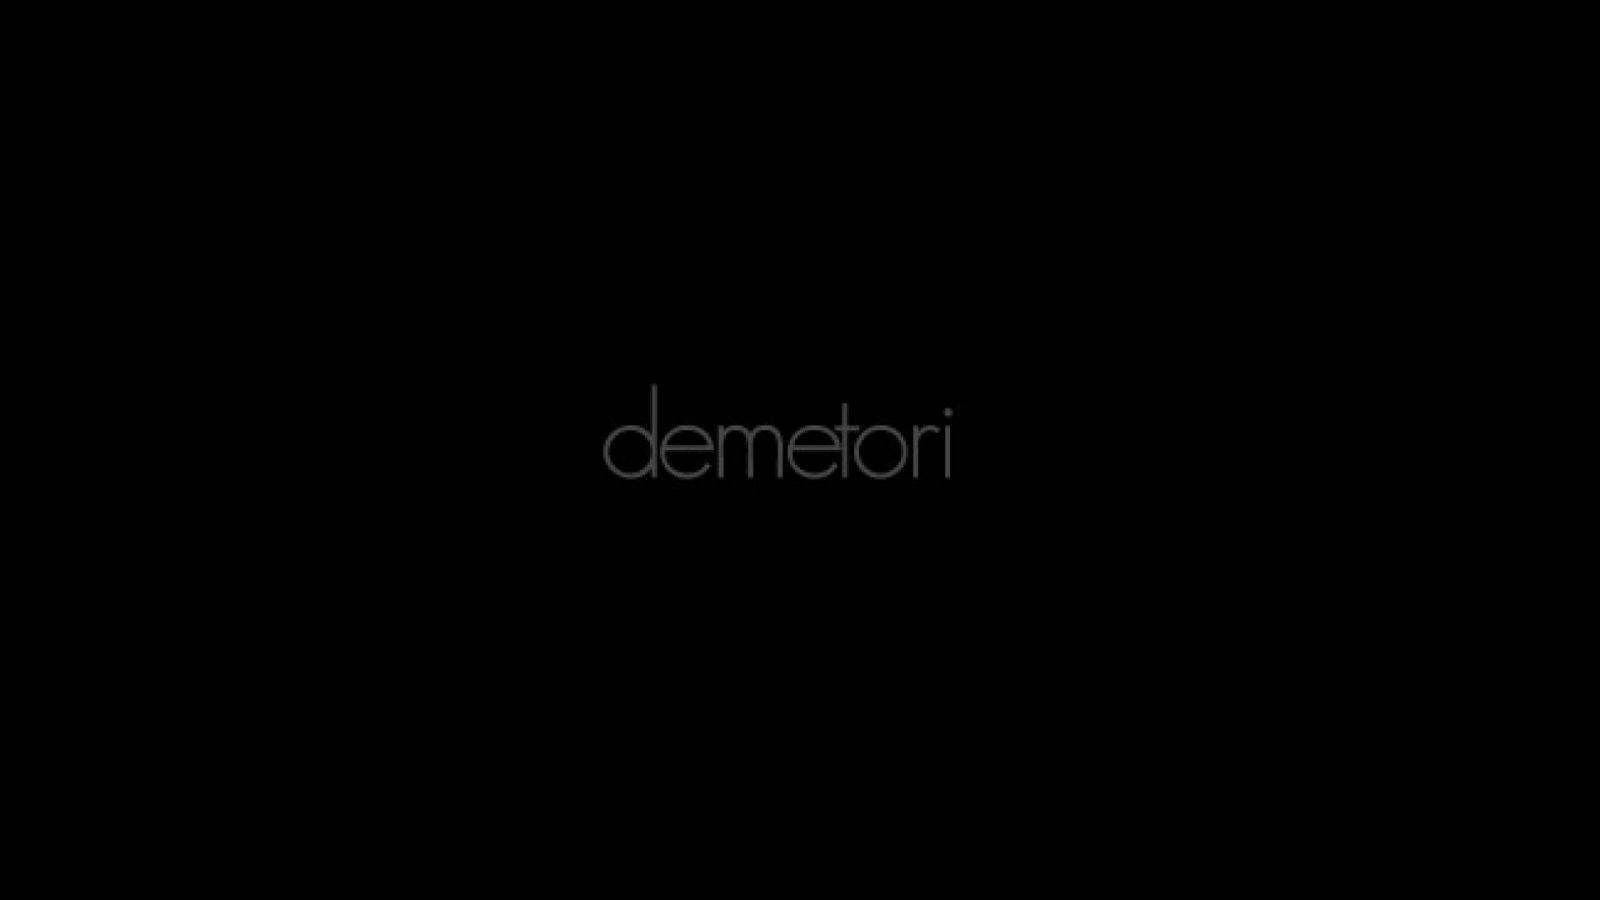 New Album from Demetori © Demetori. All rights reserved.